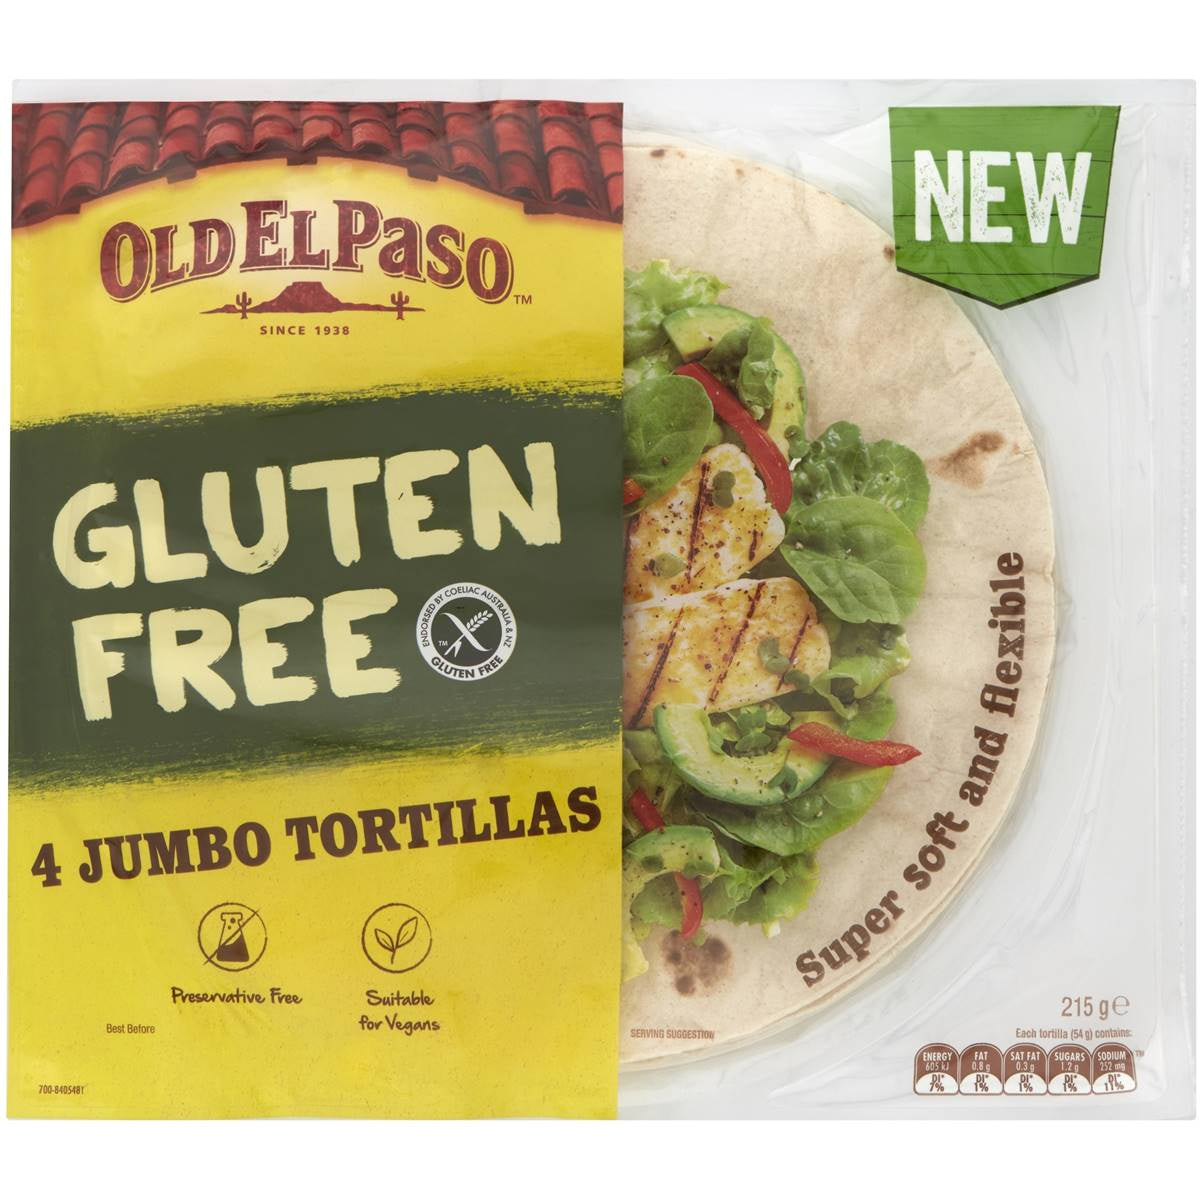 Old El Paso Gluten Free Jumbo Tortillas 4pk 215g